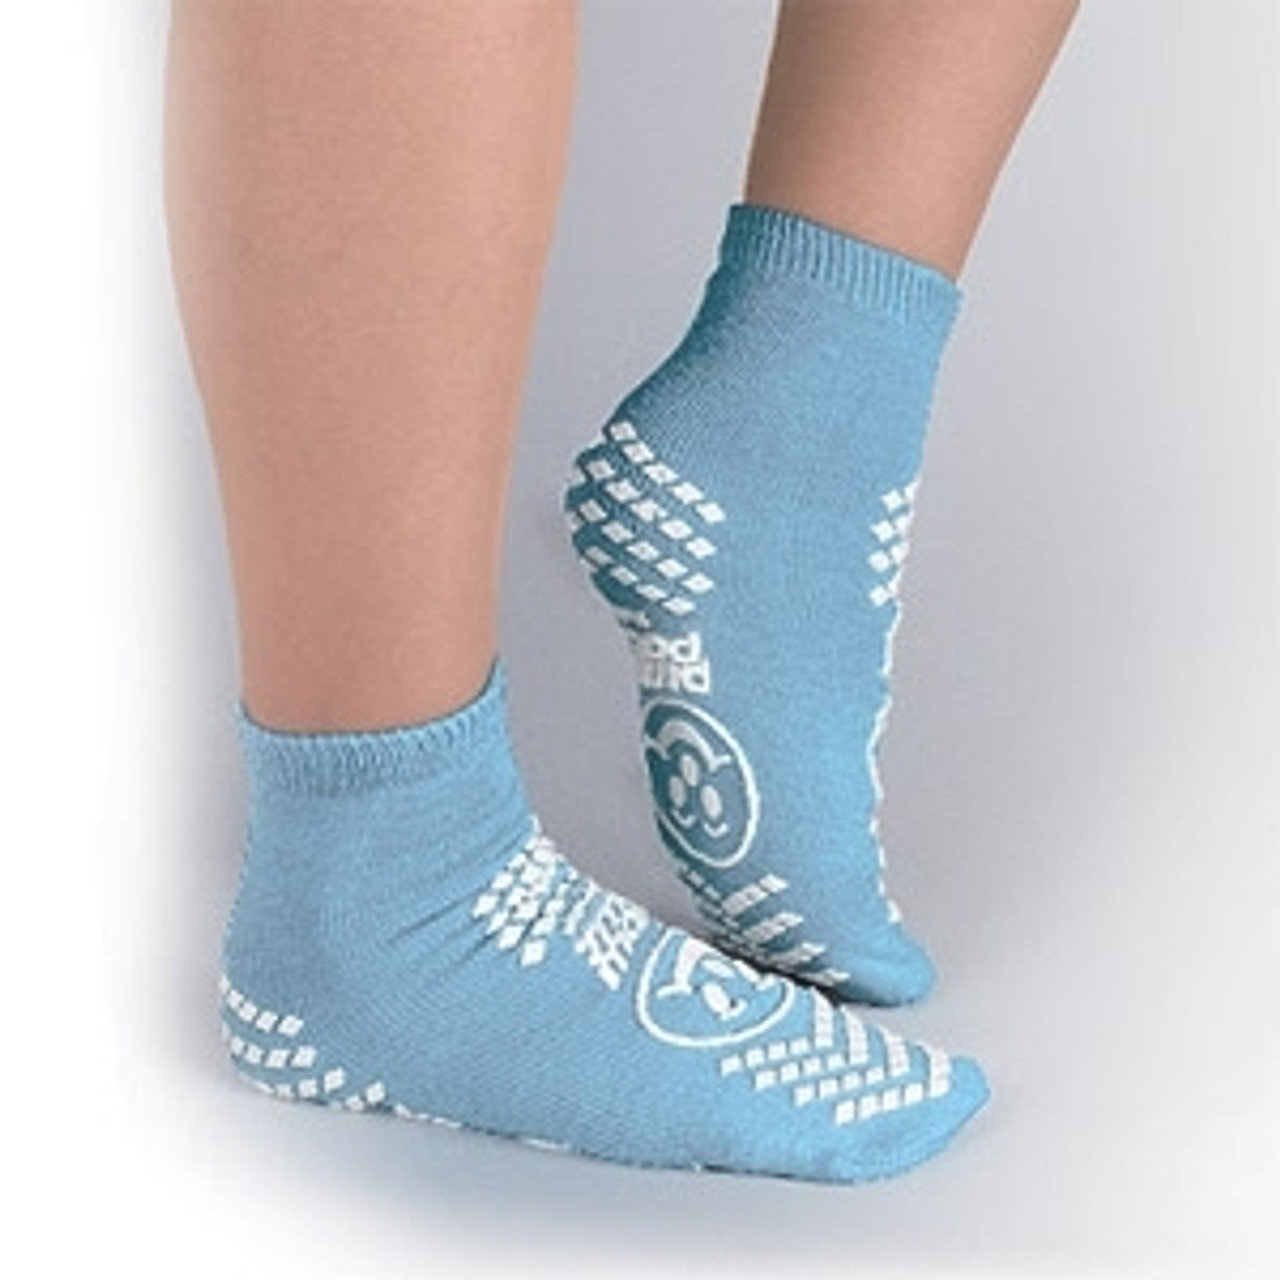 Slipper Socks Pillow Paws by Principle Business Enterprises